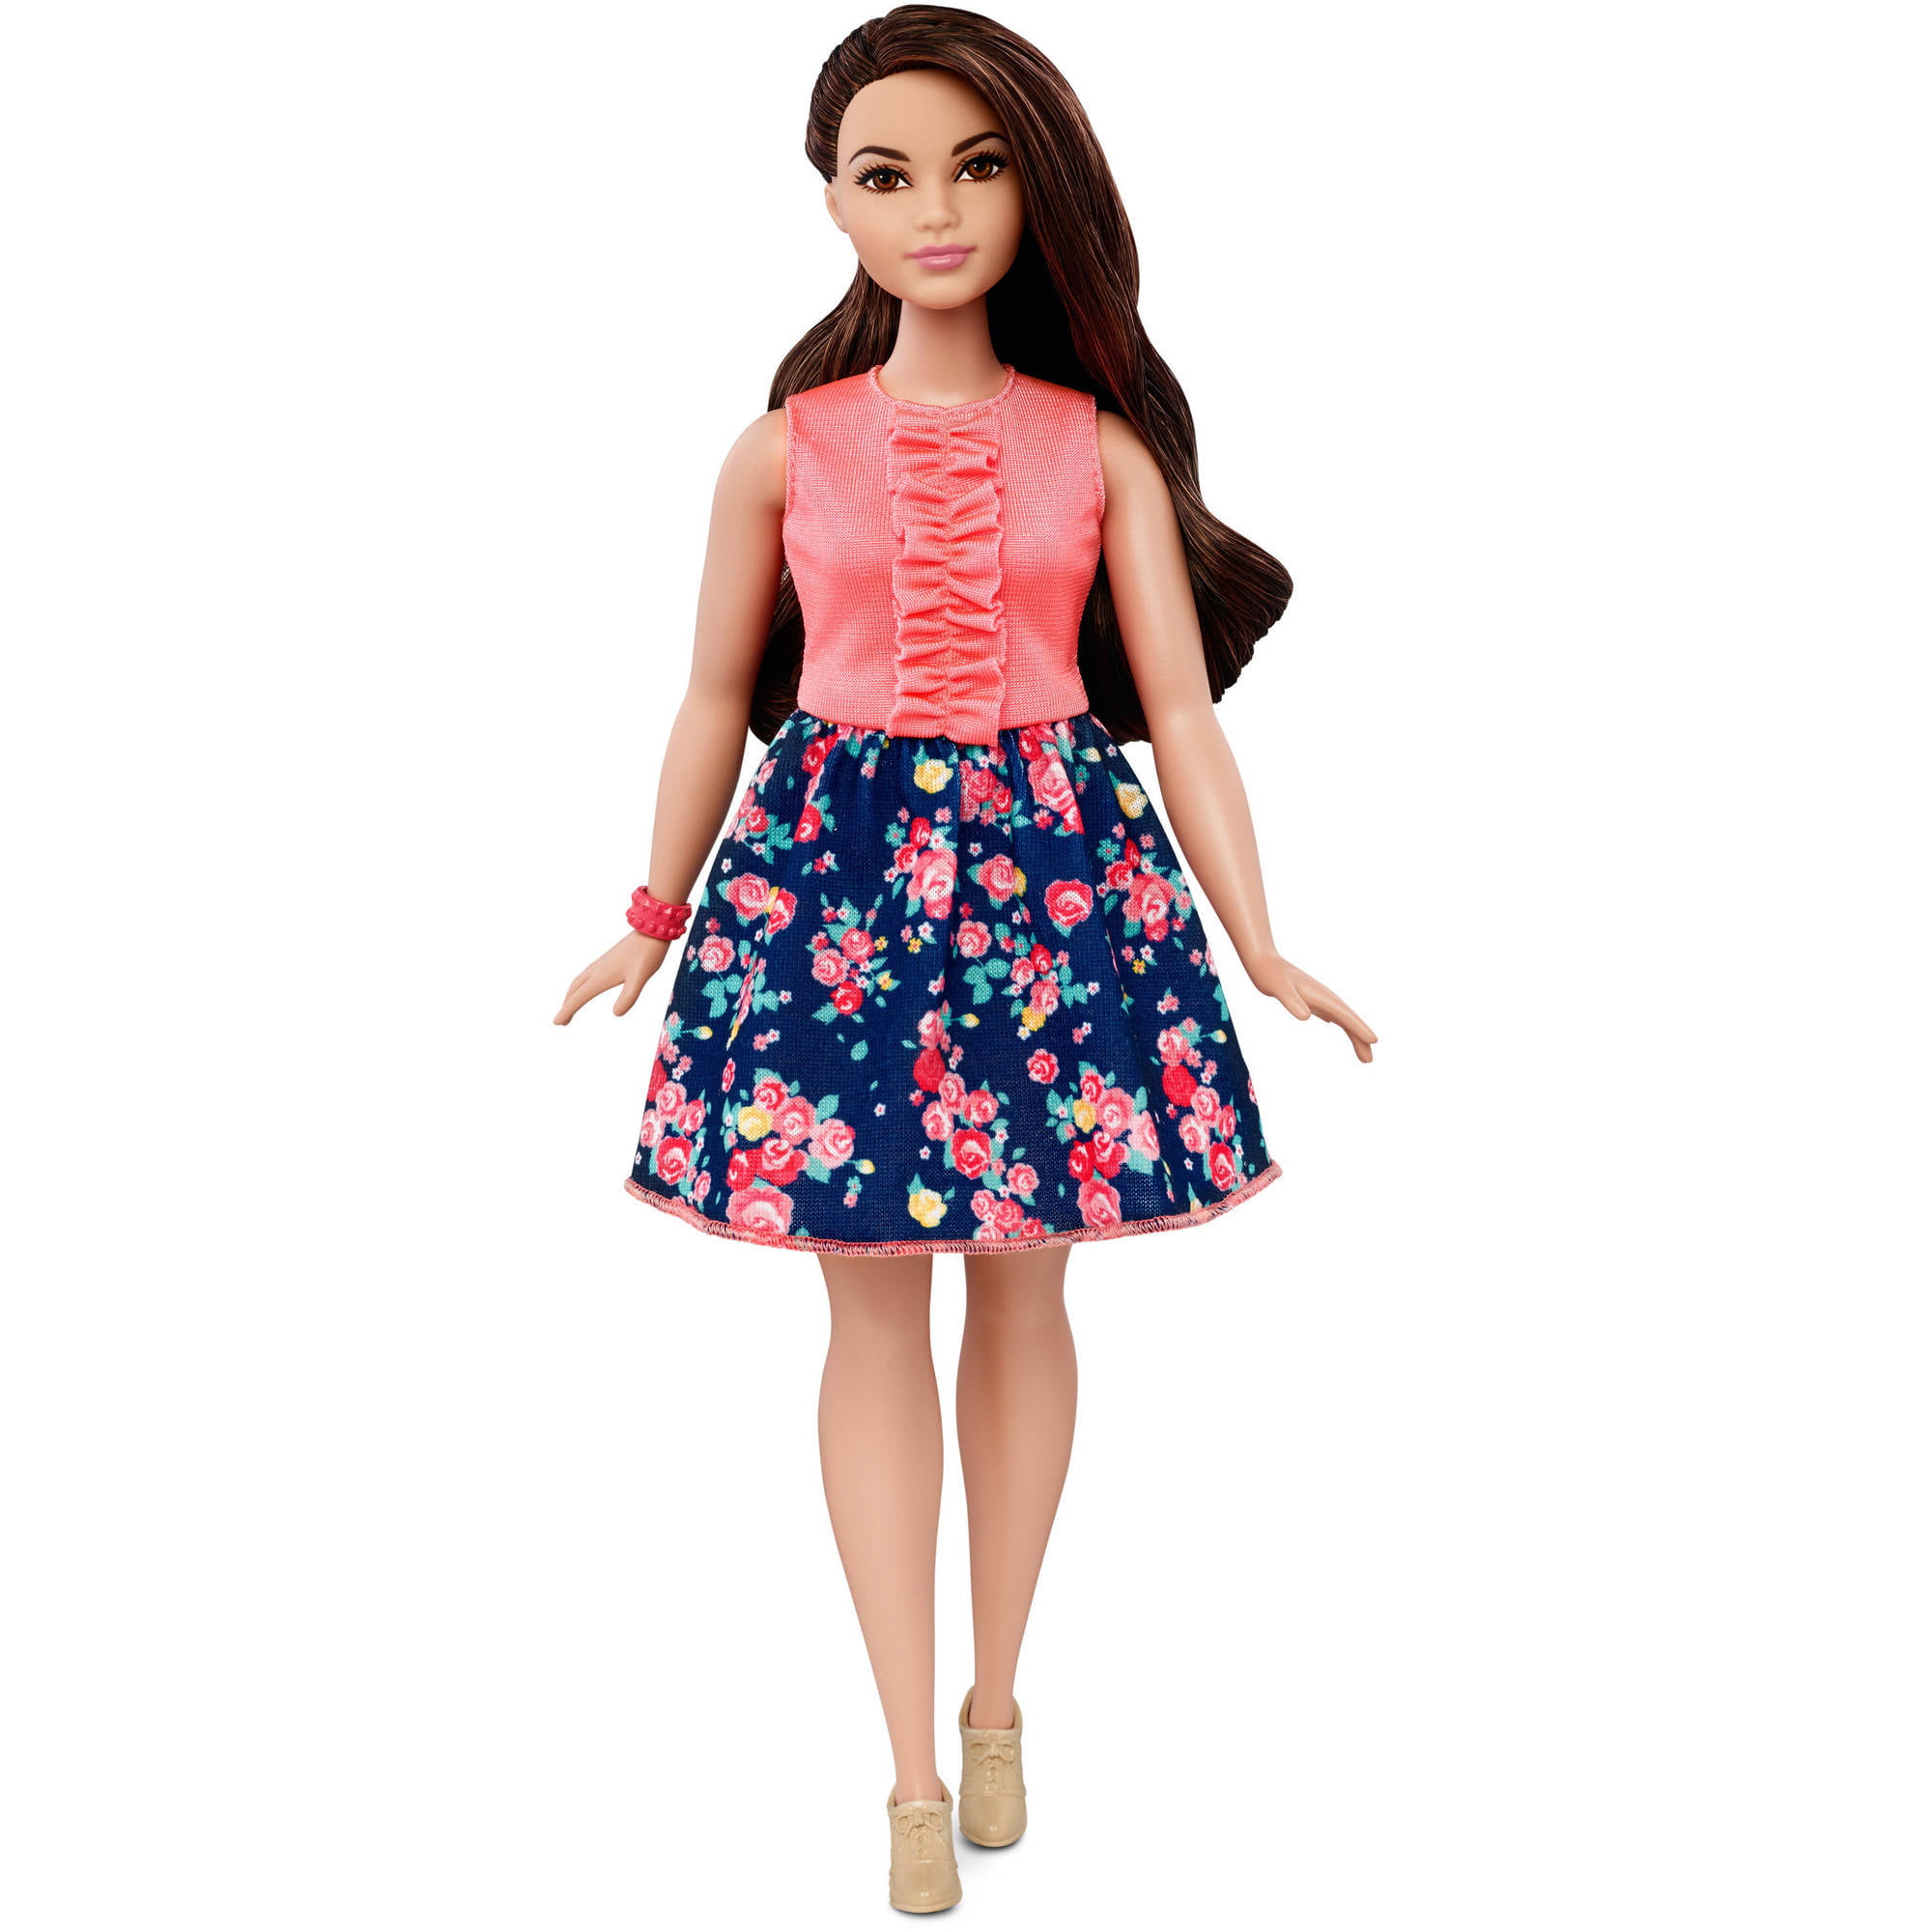 Walmart Barbie Fashionista Dolls